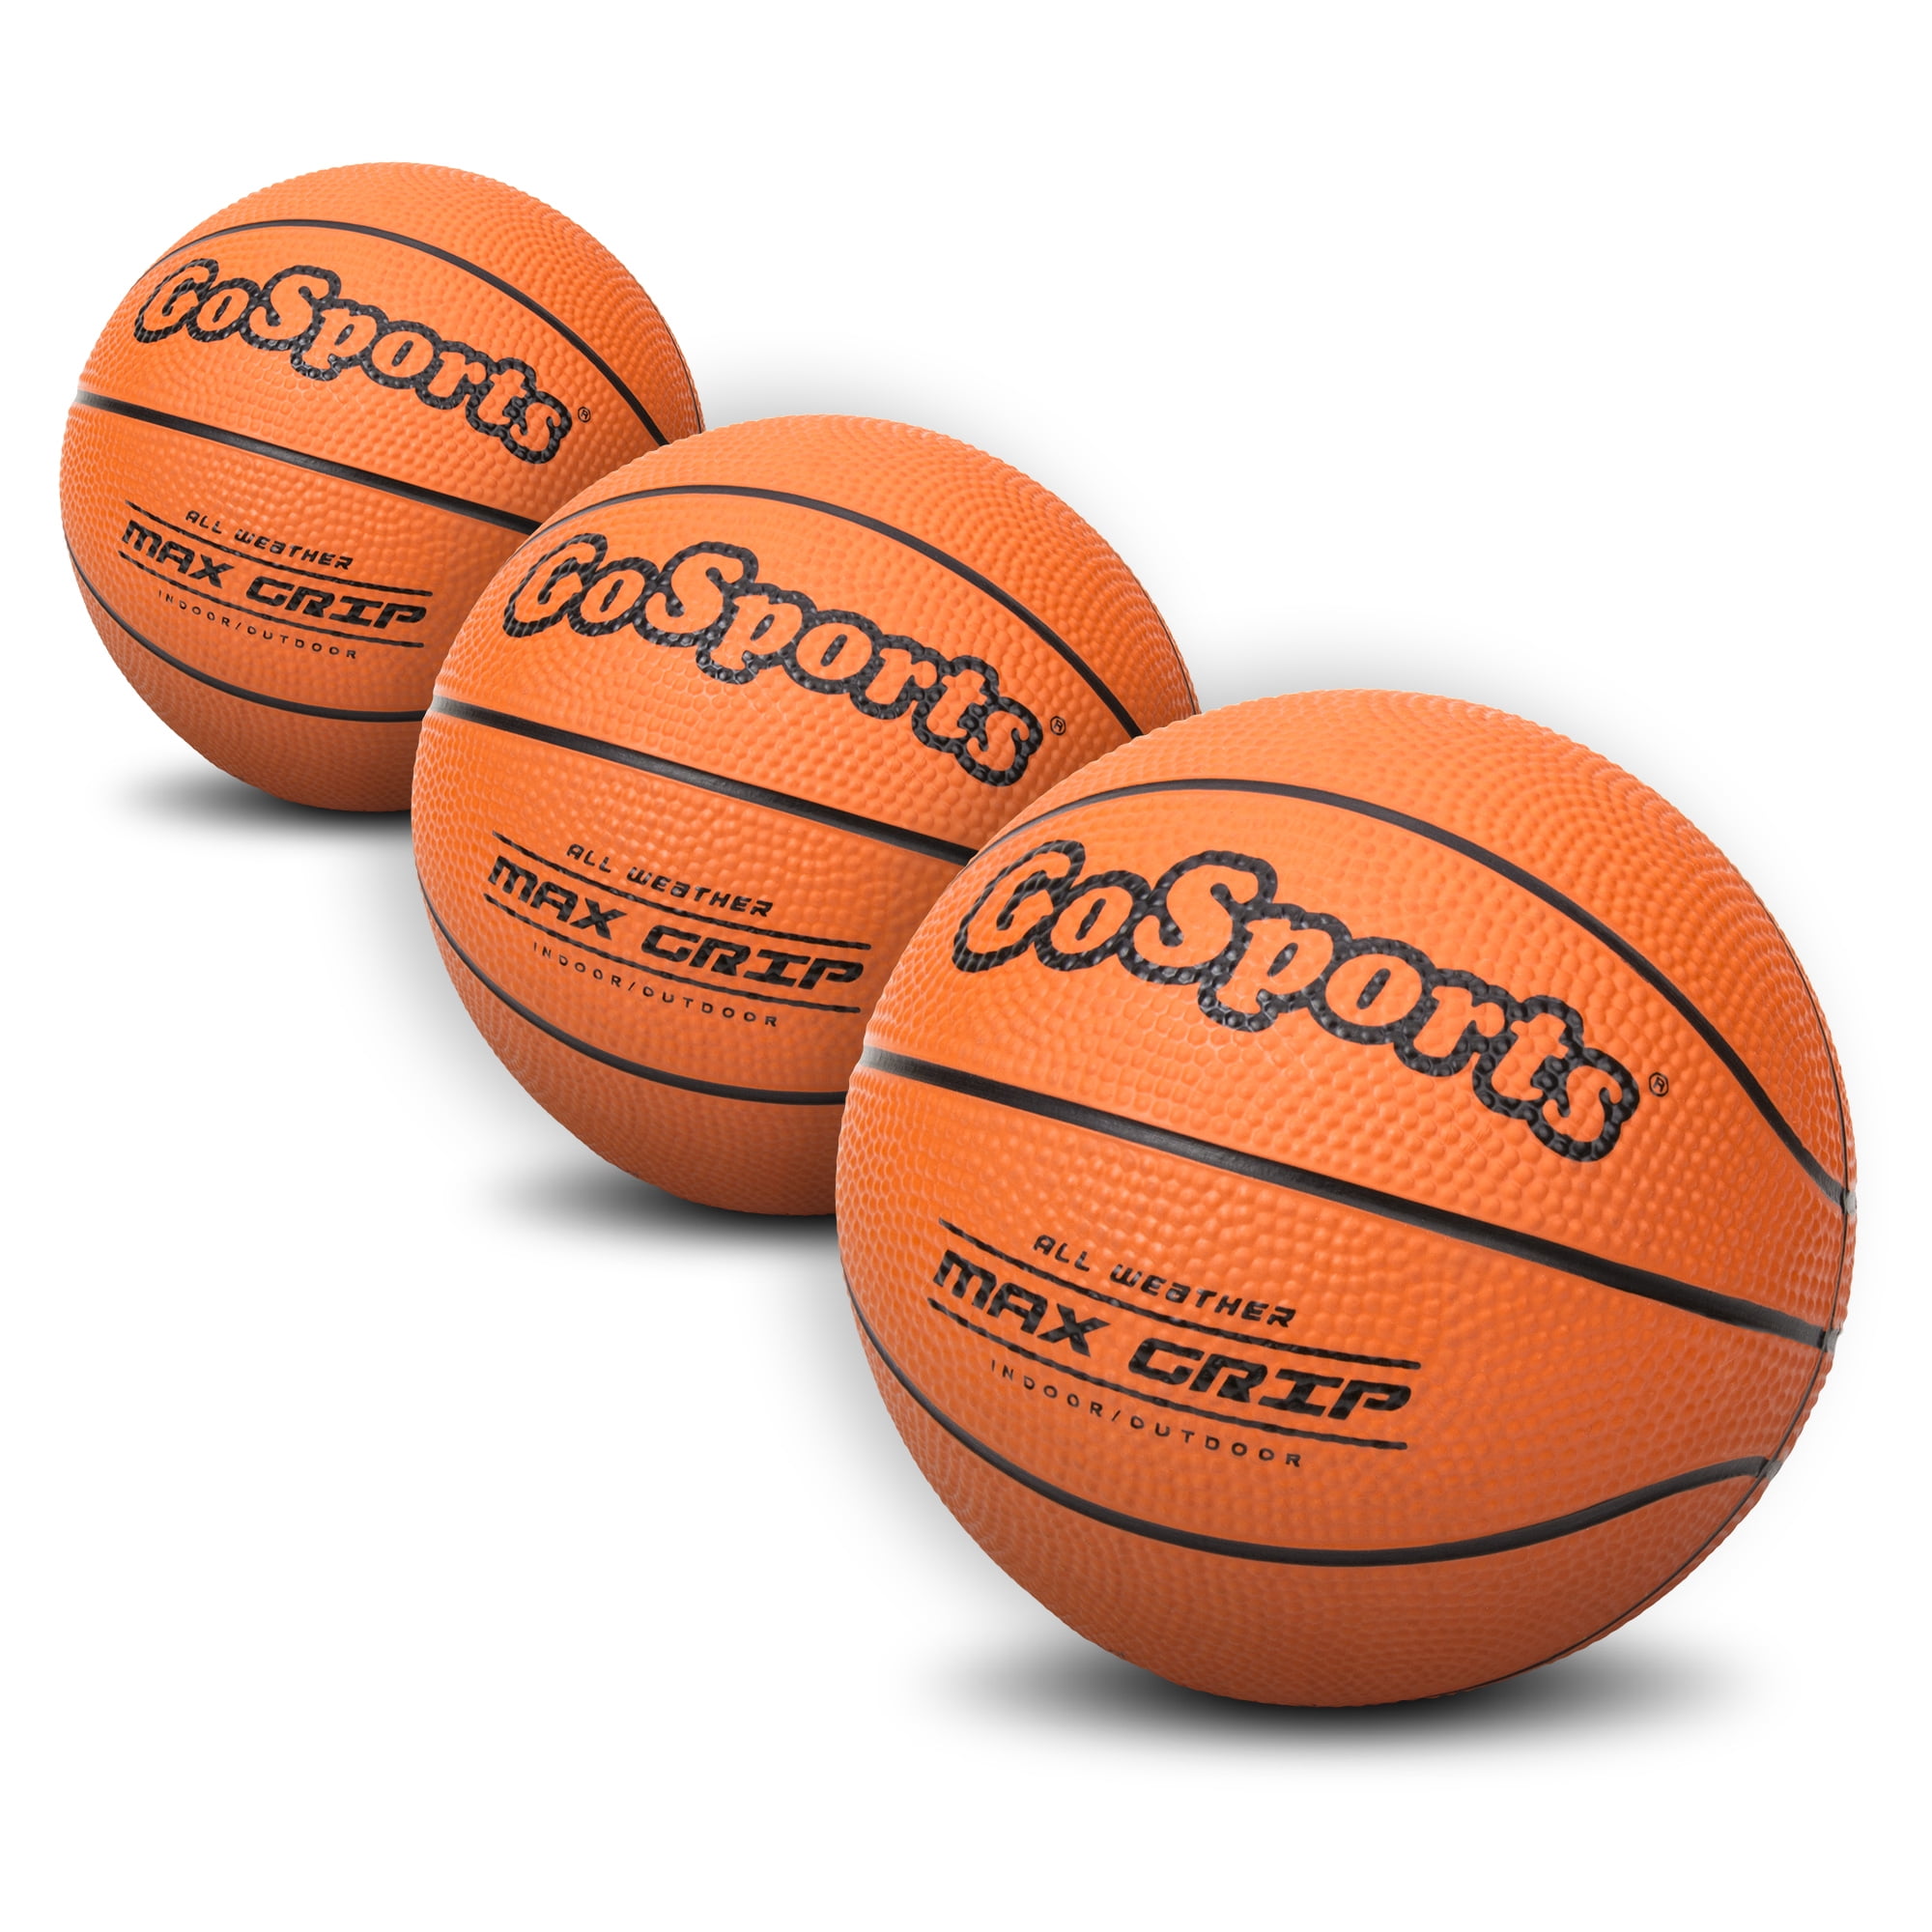 5 Mini Basketball Balls for Mini Hoop Basketball or Over The Door Basketball Hoop Games Small Basketball for Indoor or Outdoor Play PVC Mini Basketball, 3 Pack 